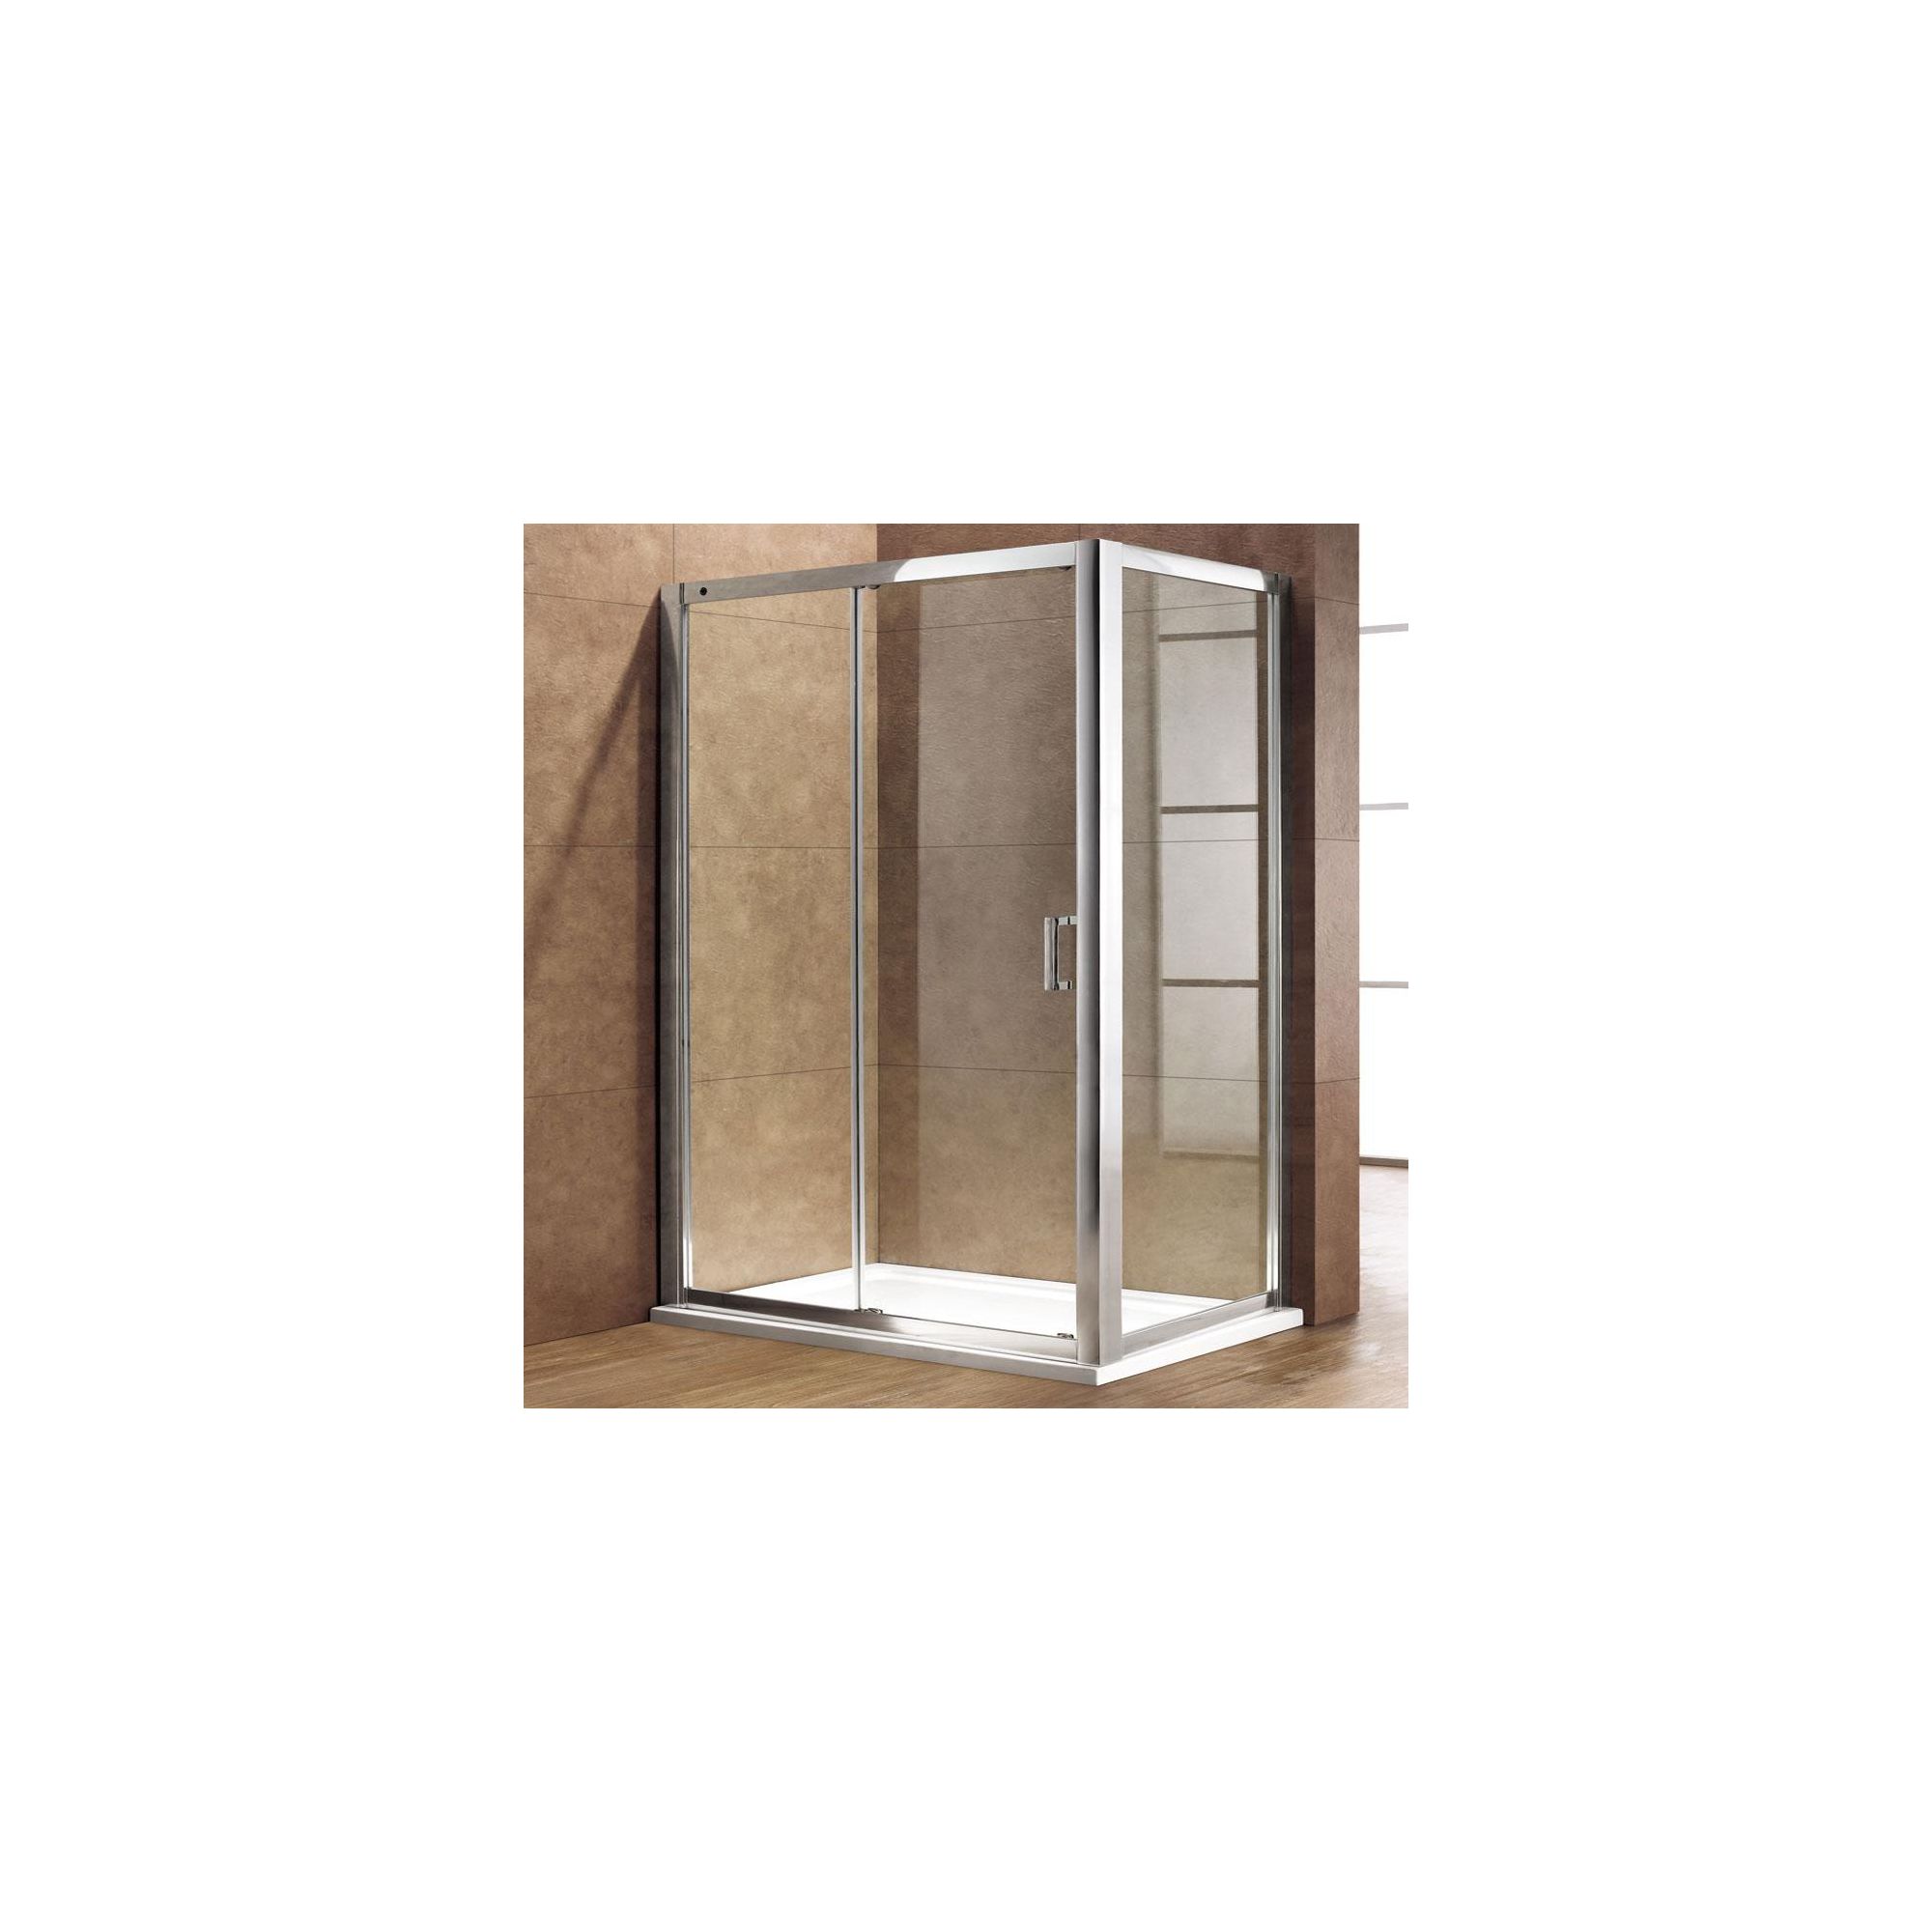 Duchy Premium Single Sliding Shower Door, 1200mm Wide, 8mm Glass at Tesco Direct